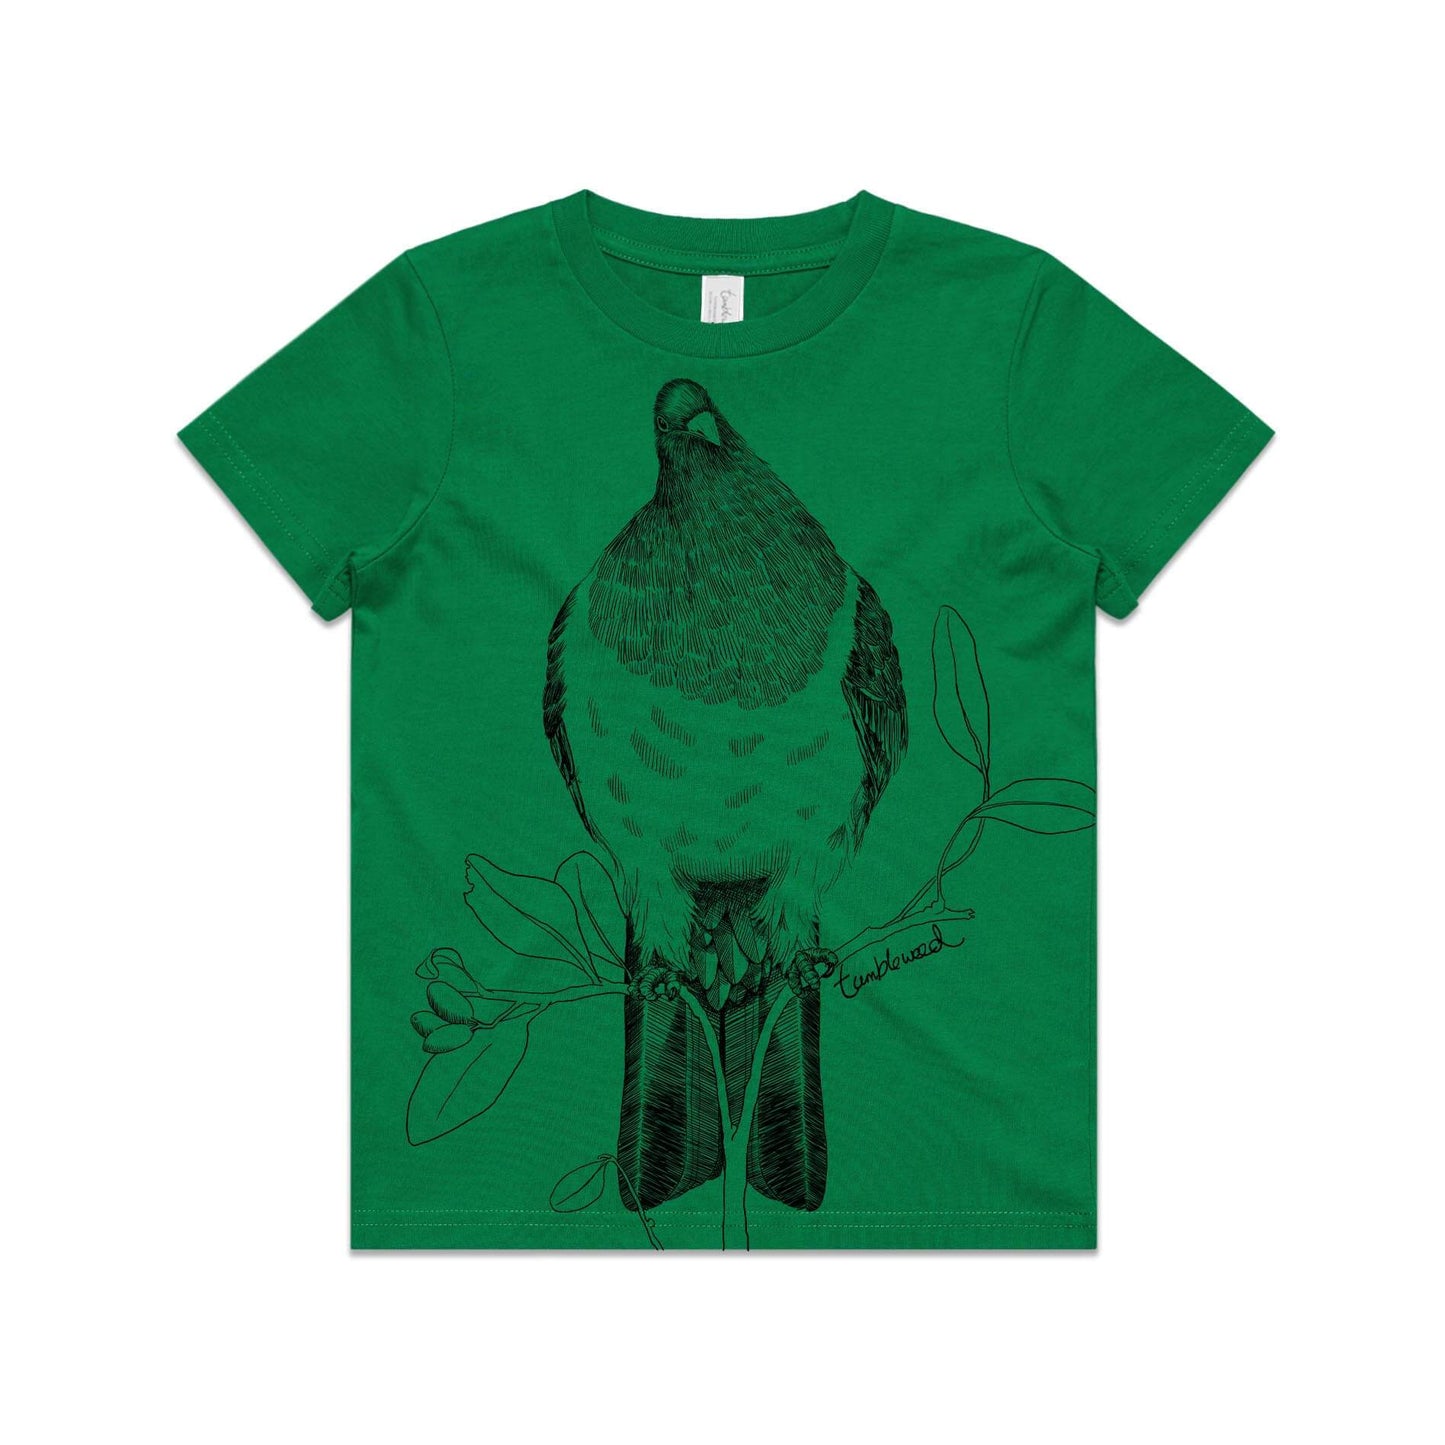 Green, cotton kids' t-shirt with screen printed kererū design.